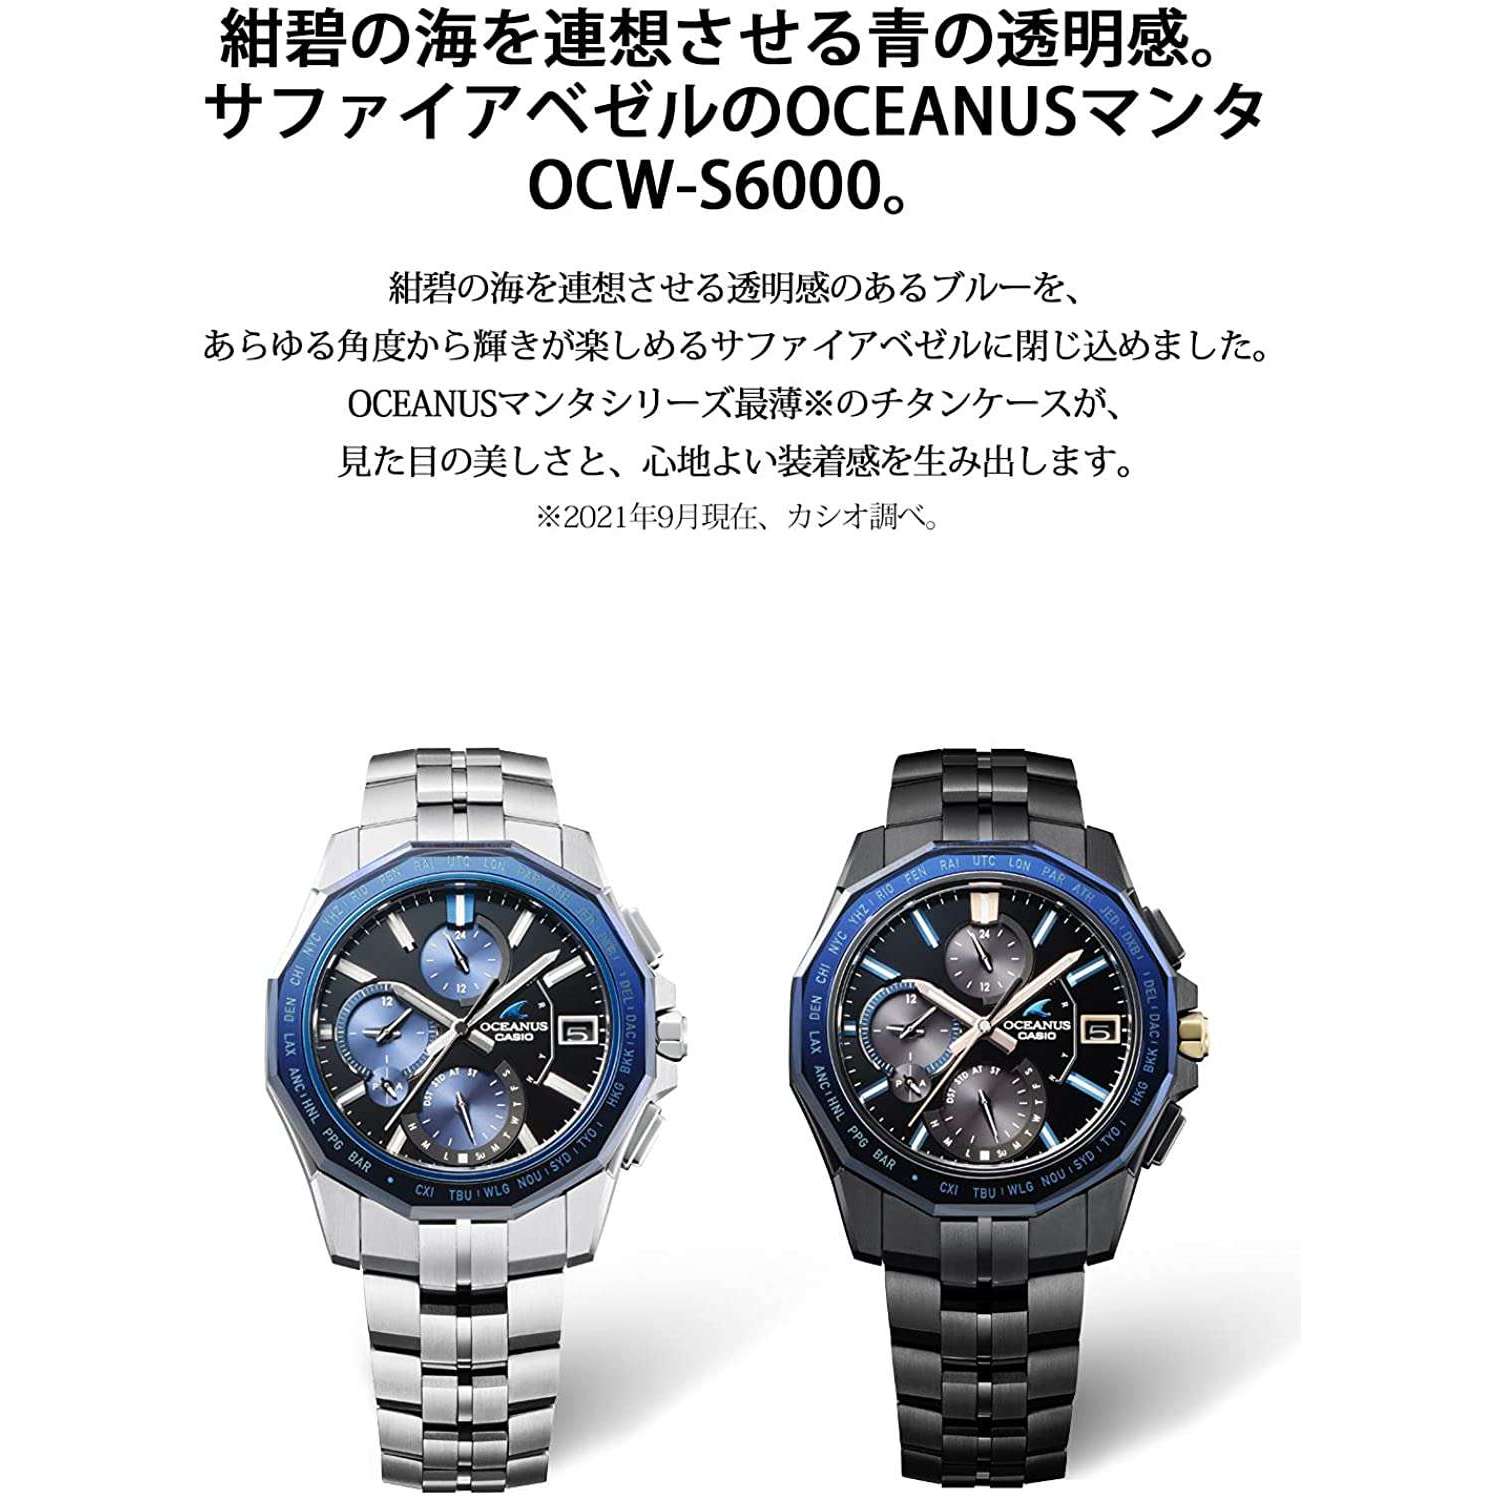 ROOK JAPAN:CASIO OCEANUS MANTA JDM MEN WATCH OCW-S6000B-1AJF,JDM Watch,Casio Oceanus